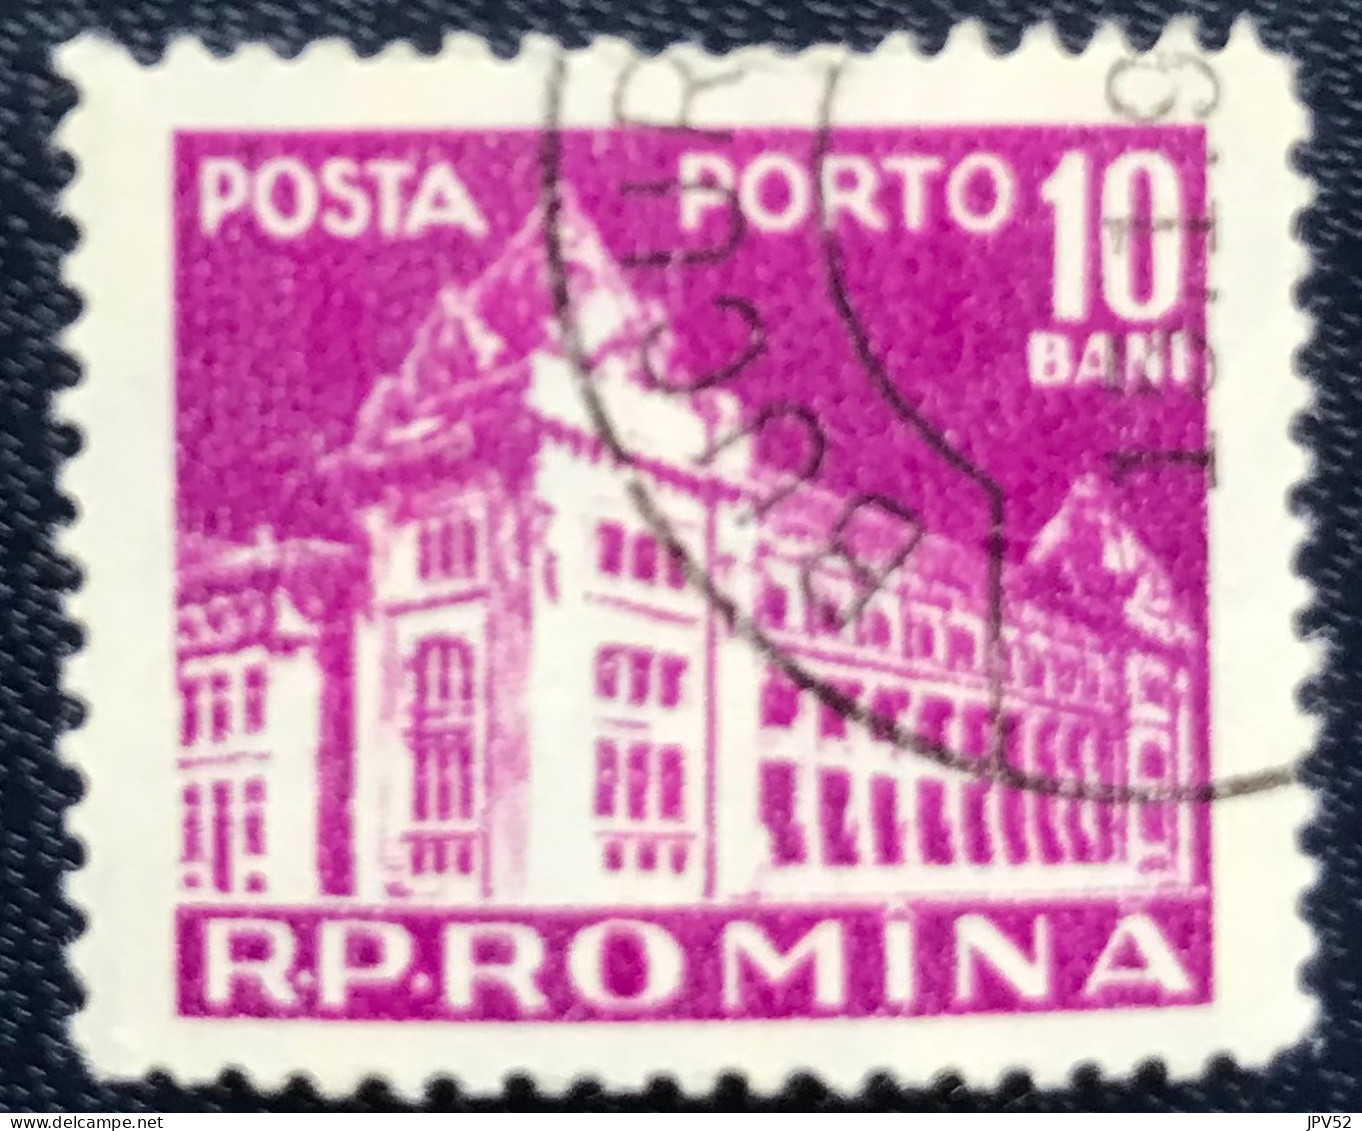 Romana - Roemenië - C14/54 - 1957 - (°)used - Michel 103 - Postkantoor - Port Dû (Taxe)